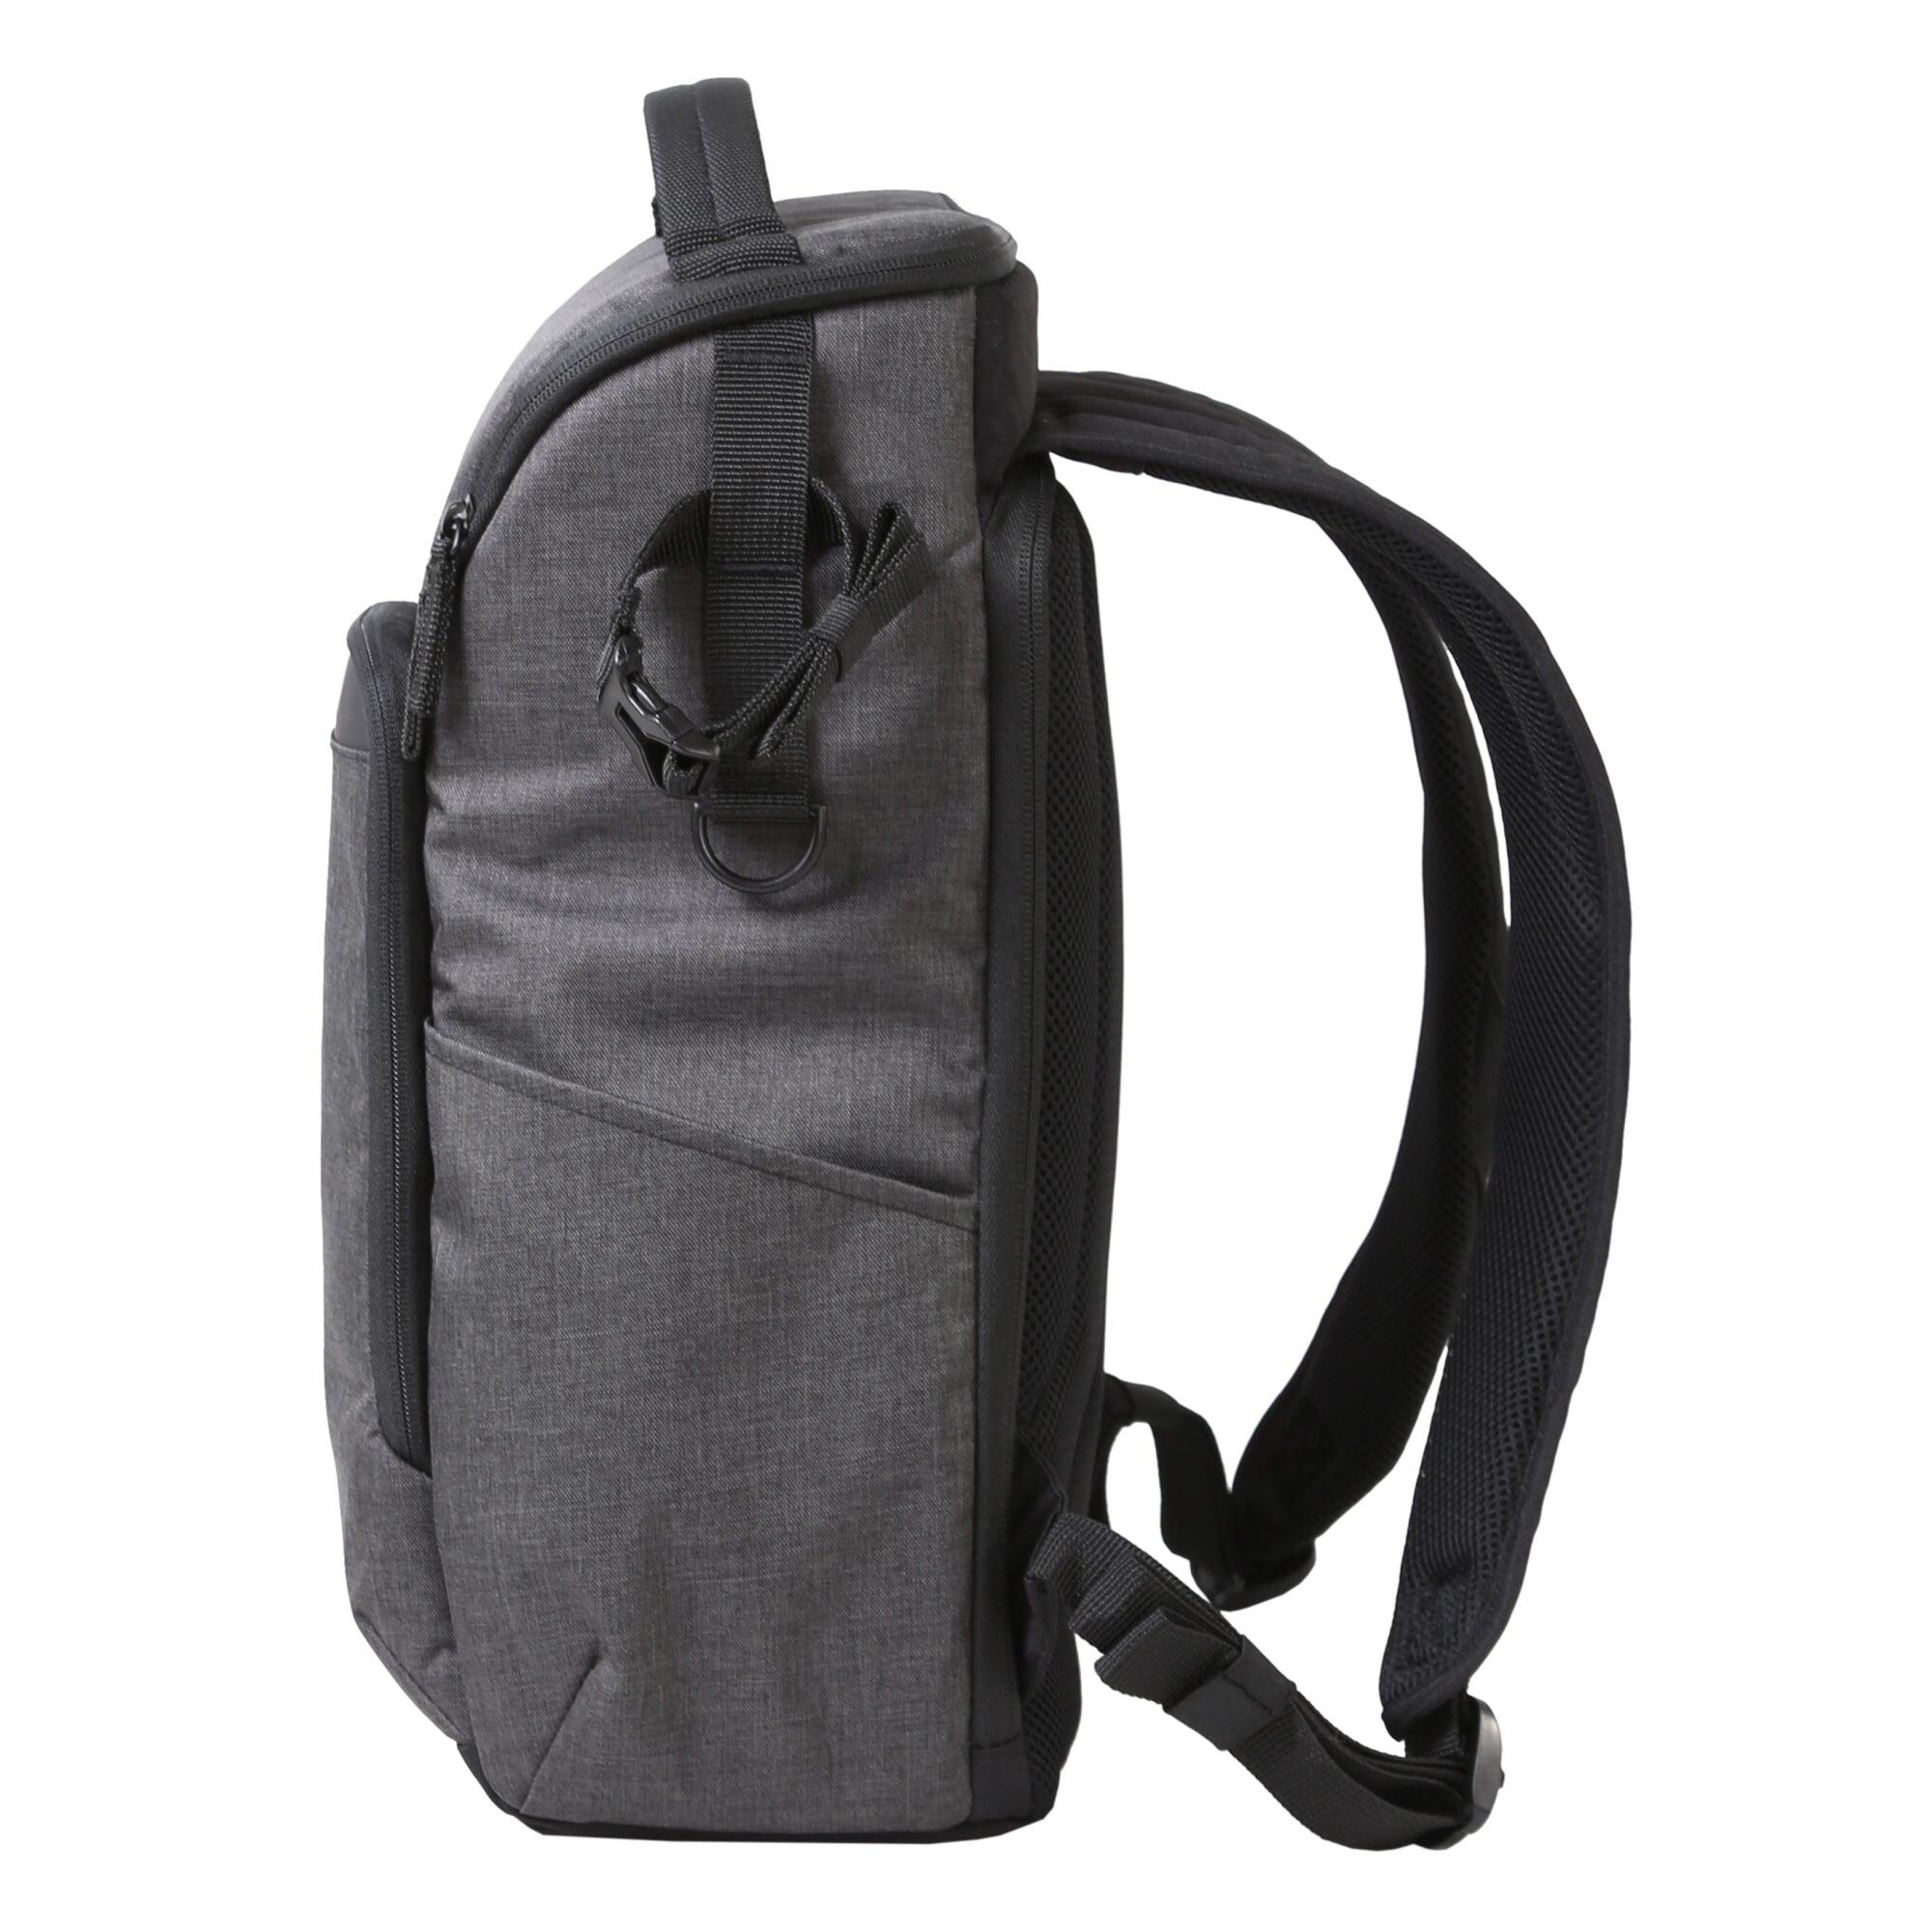 VESTA Aspire 41 GY Camera Backpack - Grey 3/5